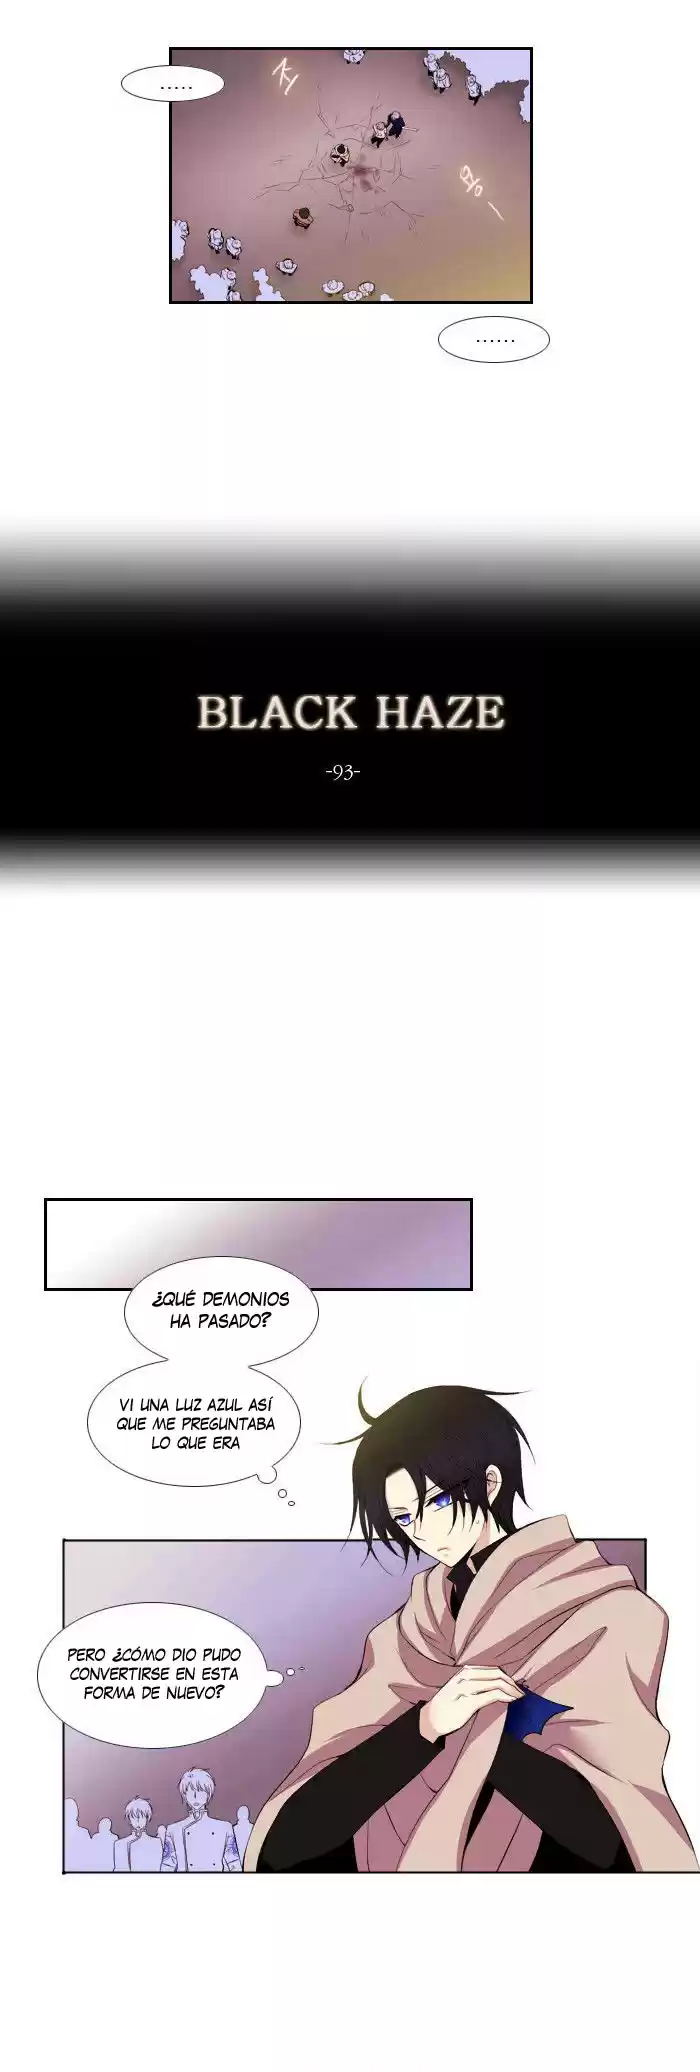 Black Haze: Chapter 93 - Page 1